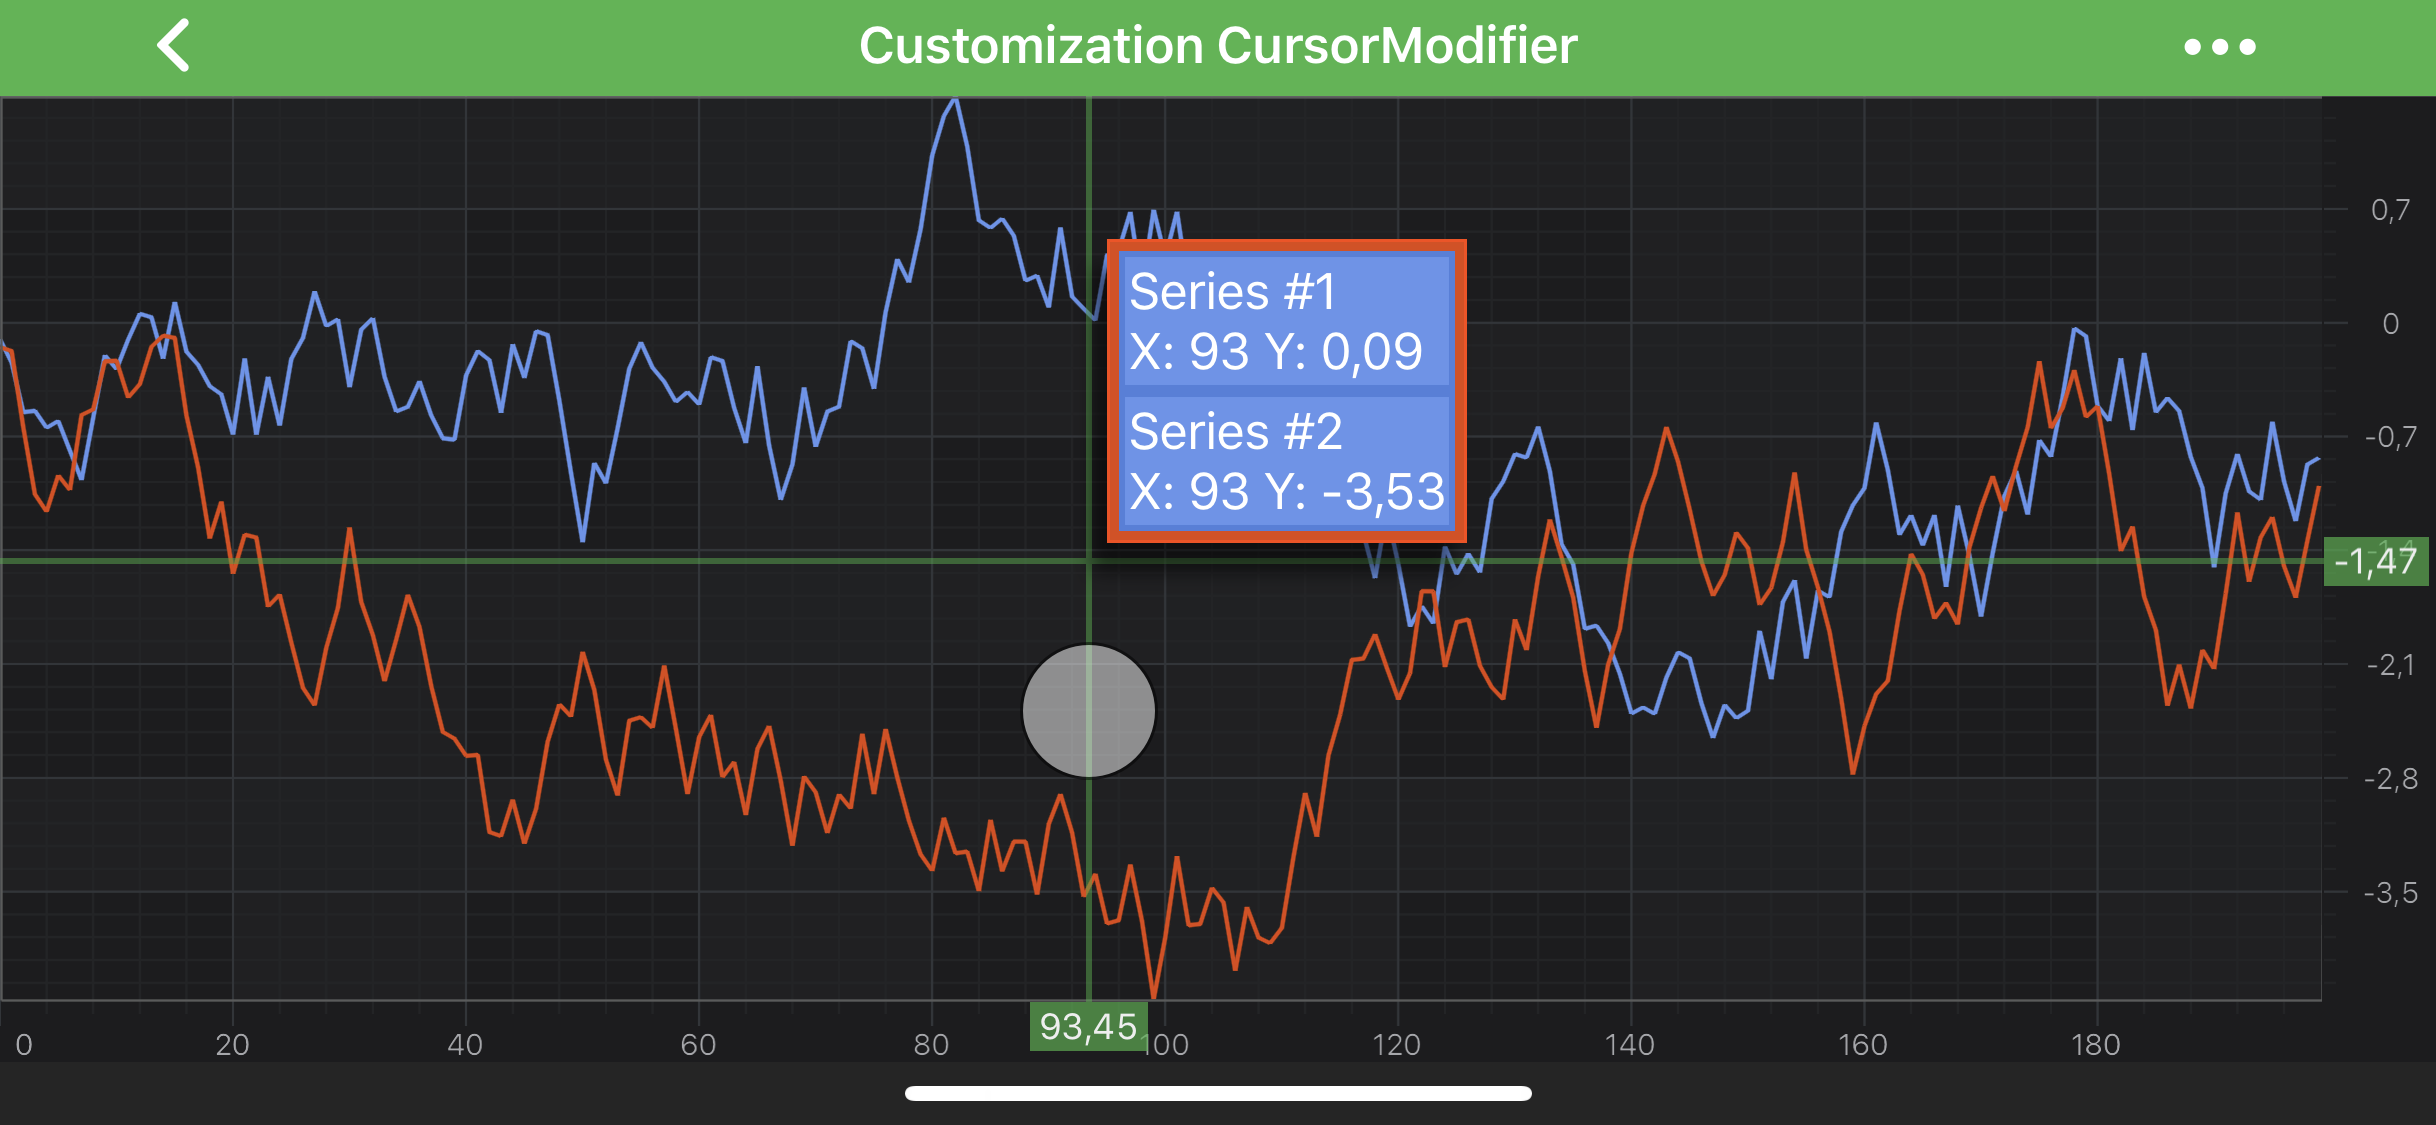 Customization Cursor Modifier